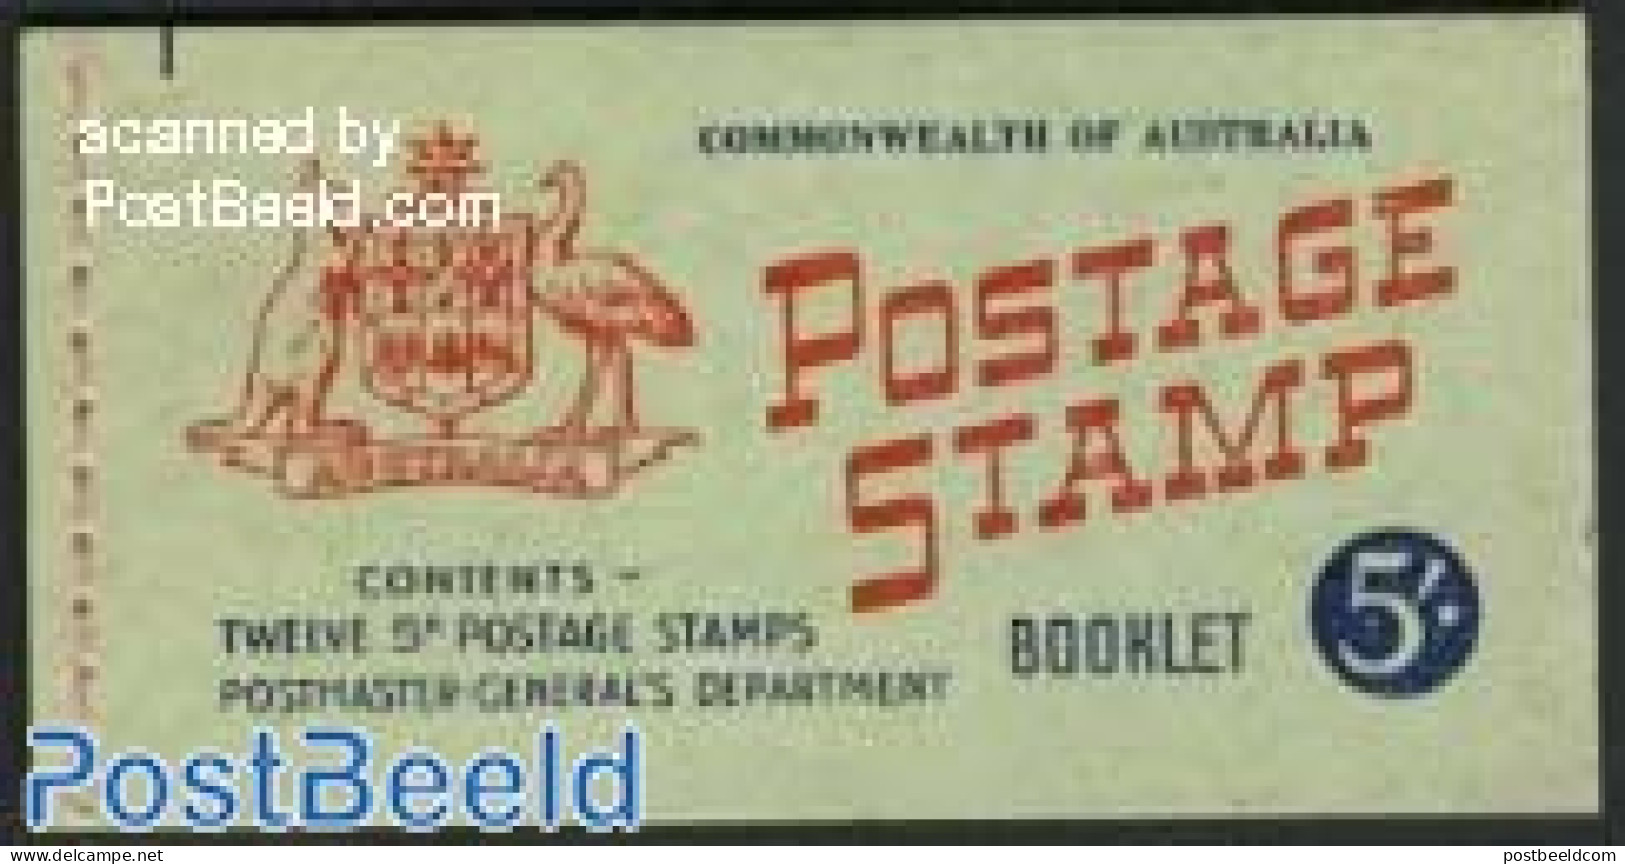 Australia 1959 Definitives Booklet, 5., Mint NH, Stamp Booklets - Unused Stamps